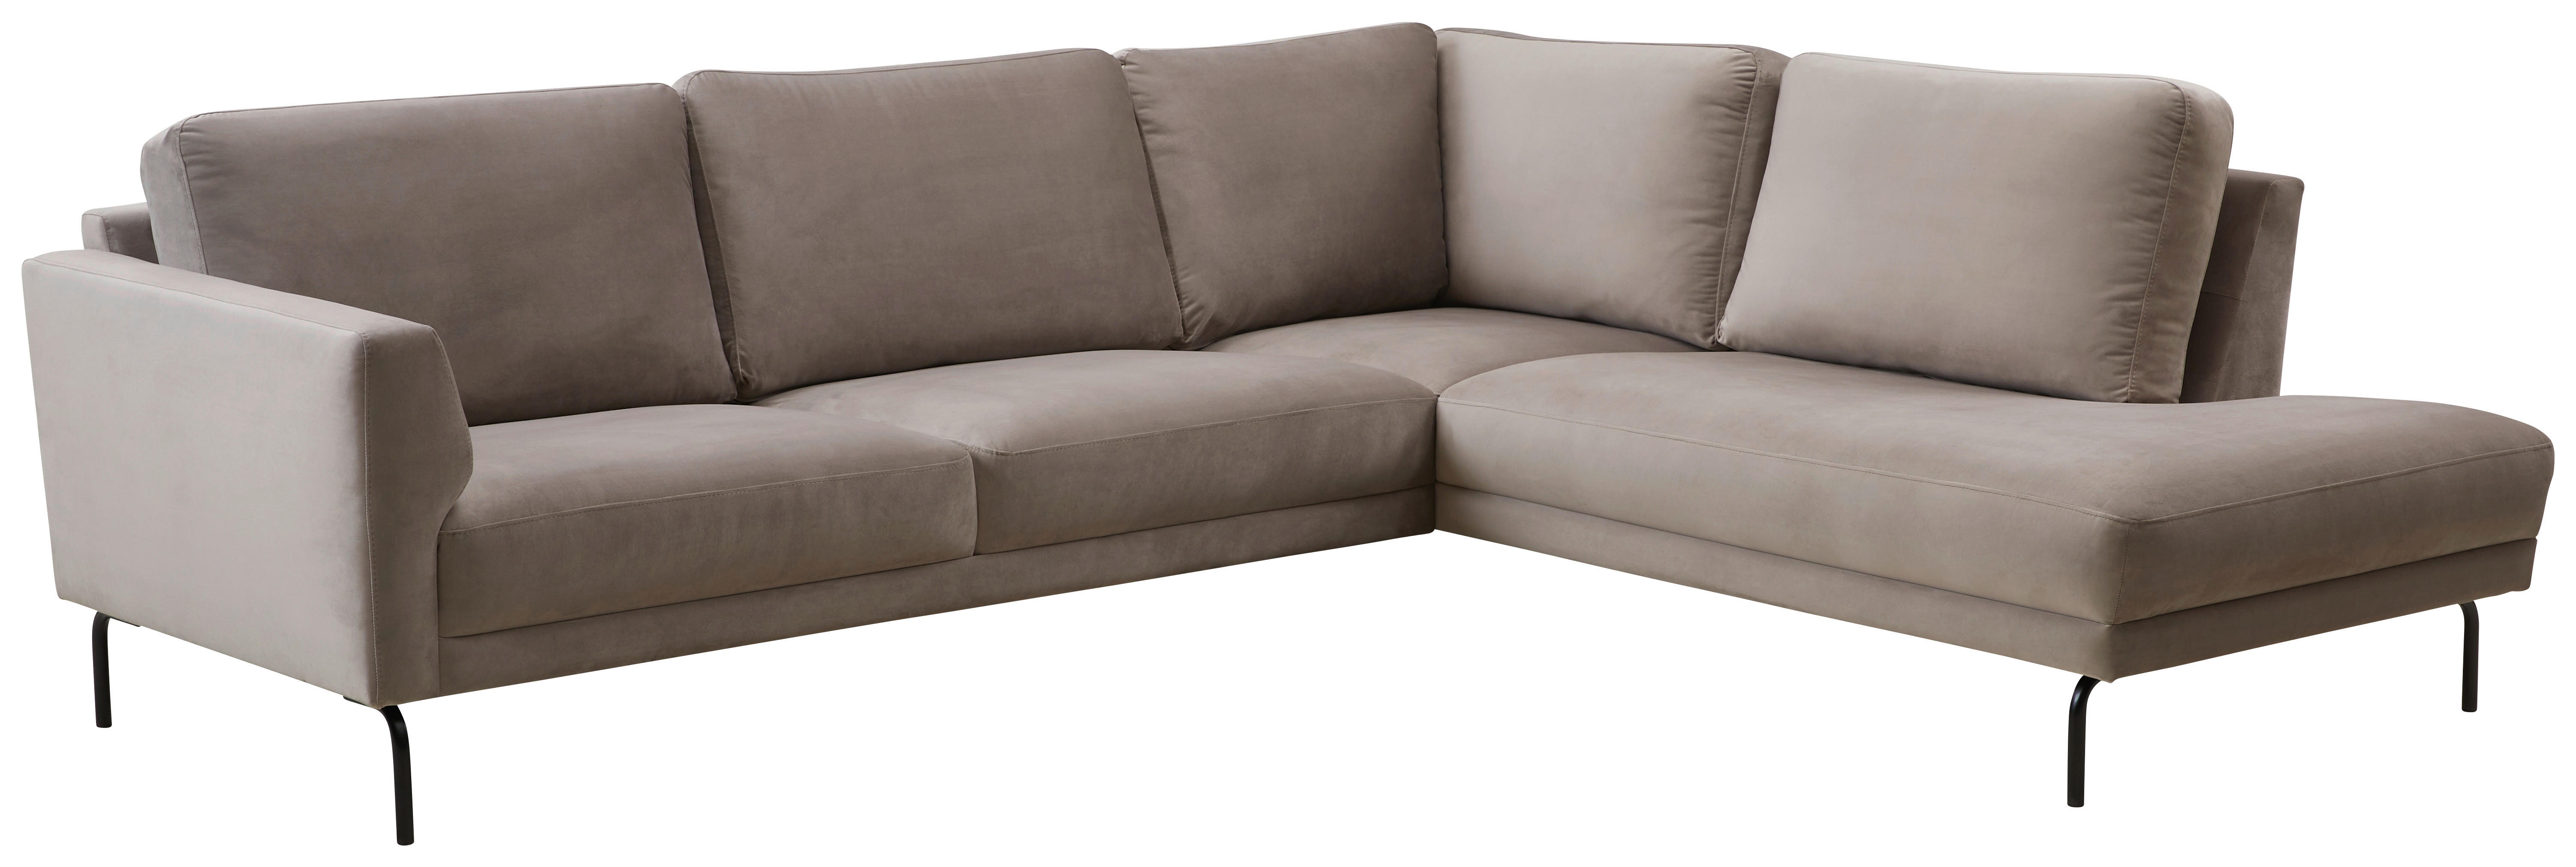 SOFFA i trä, textil beige  - beige/svart, Design, metall/trä (260/81/219cm) - Pure Home Comfort